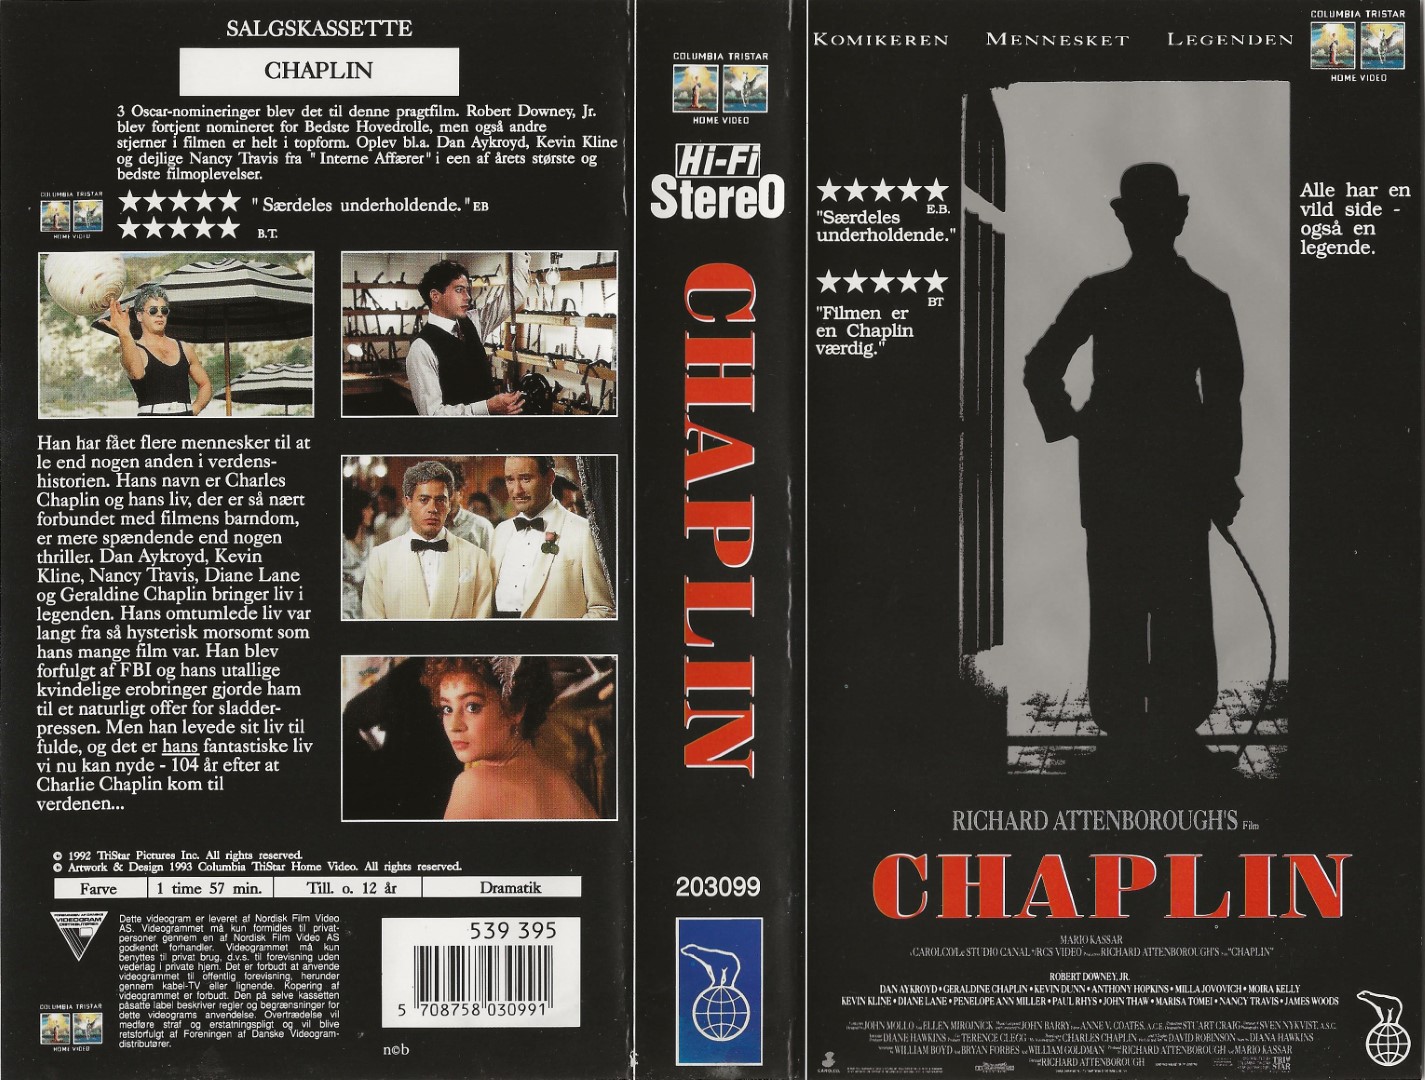 Chaplin  VHS Columbia TriStar Home Video, Nordisk Film 1993